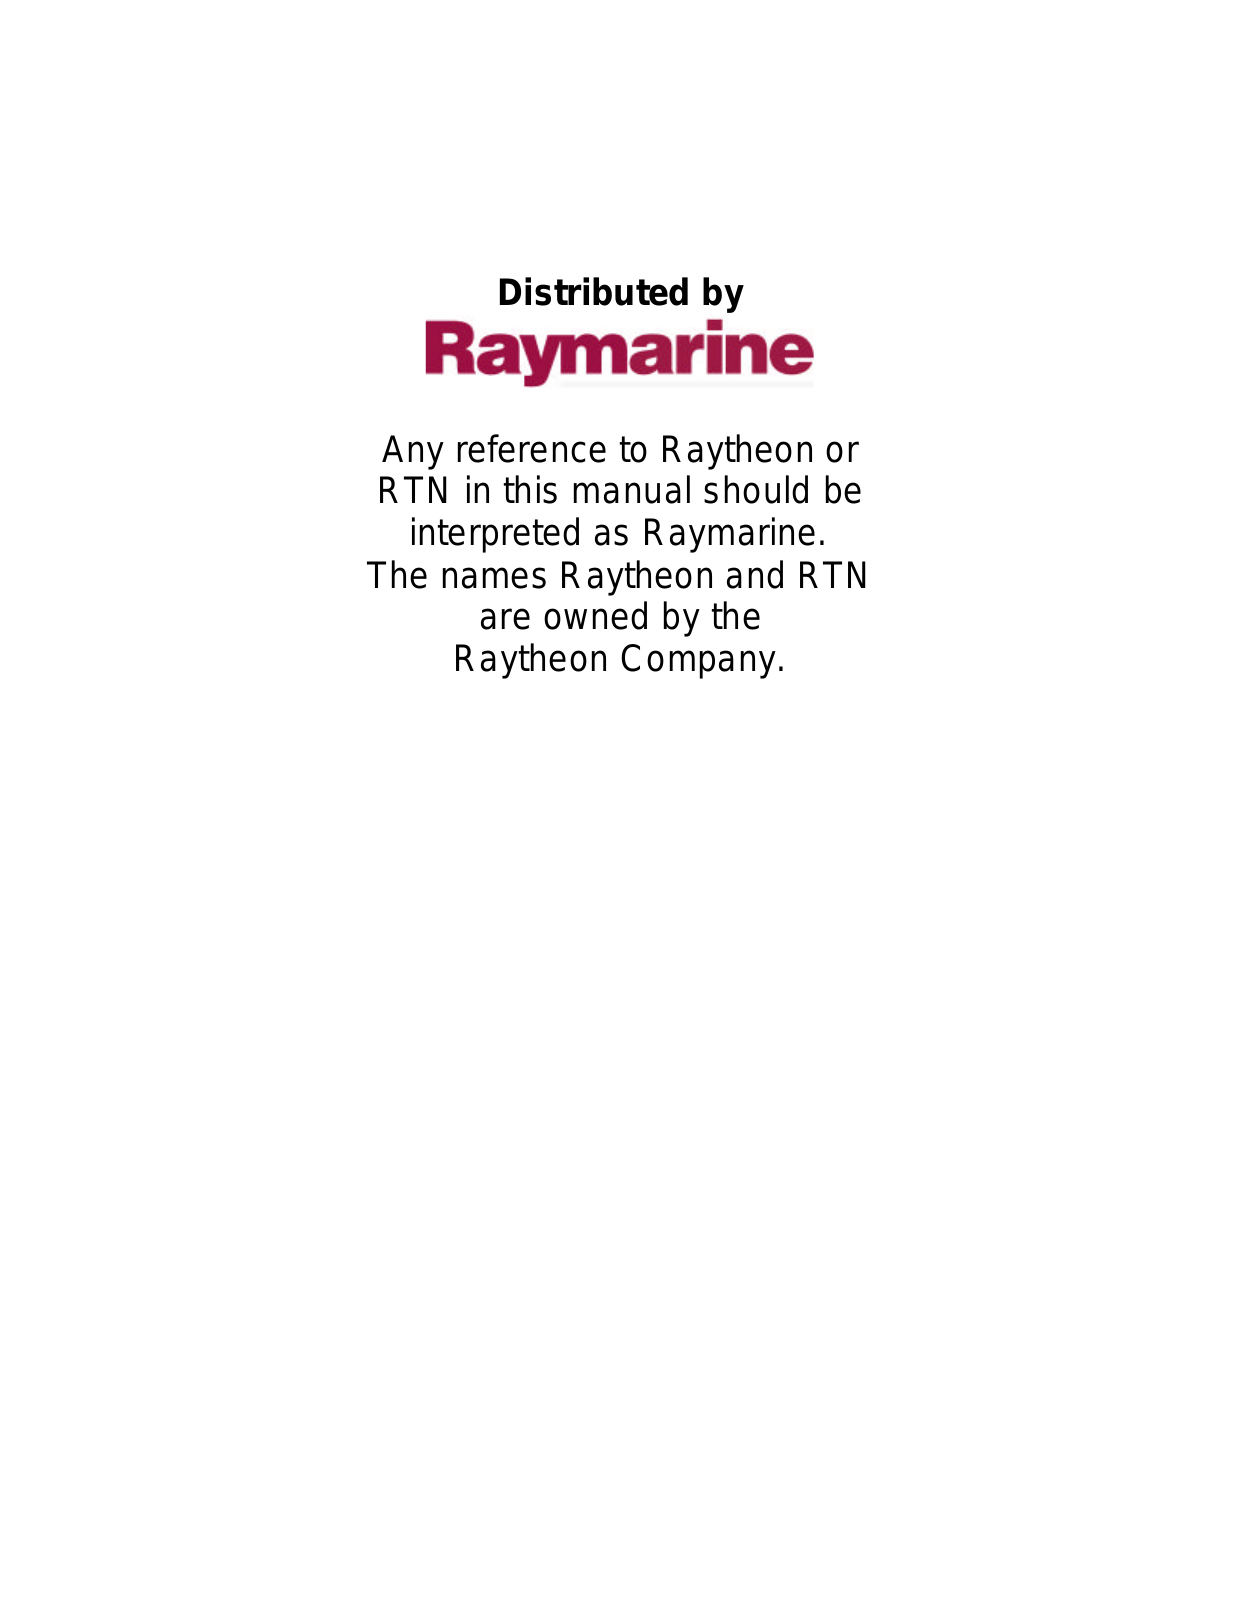 Raymarine APELCO 260 Manual